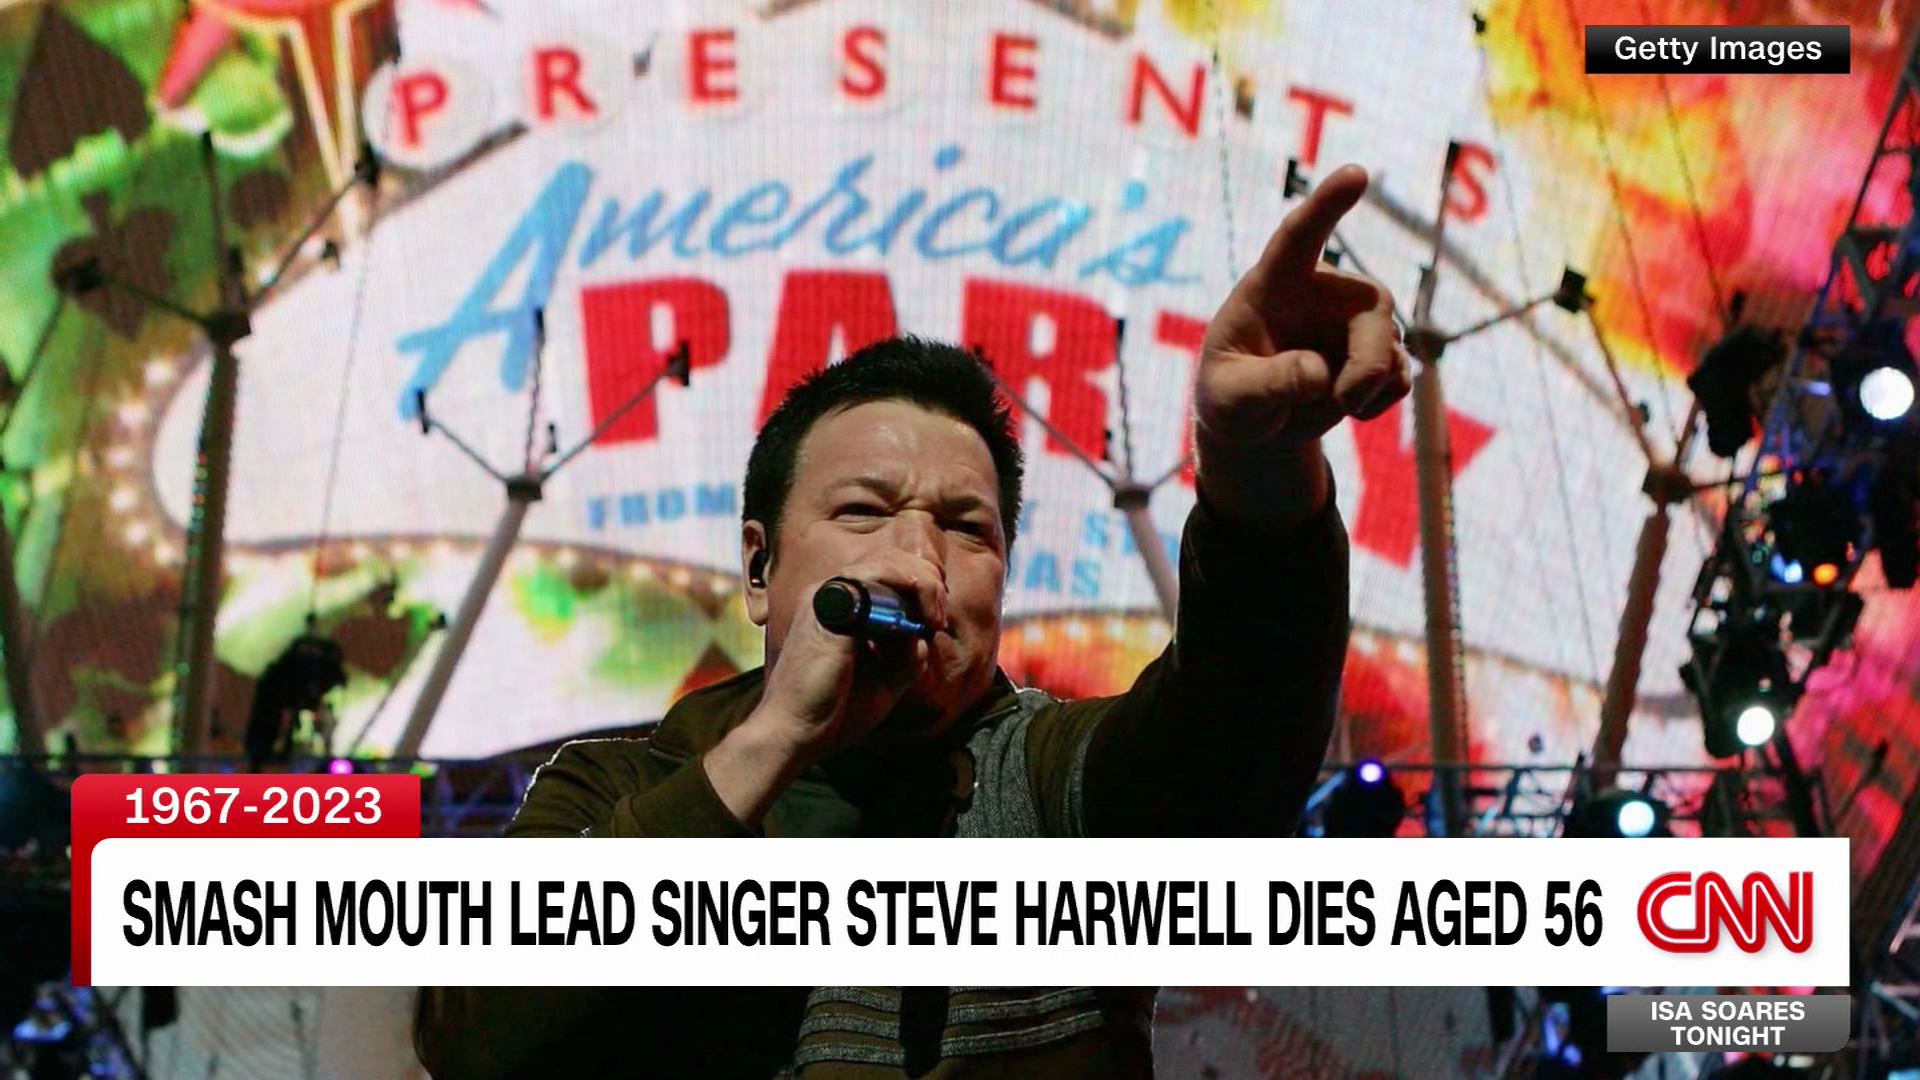 Former Smash Mouth lead singer Steve Harwell dies at 56 